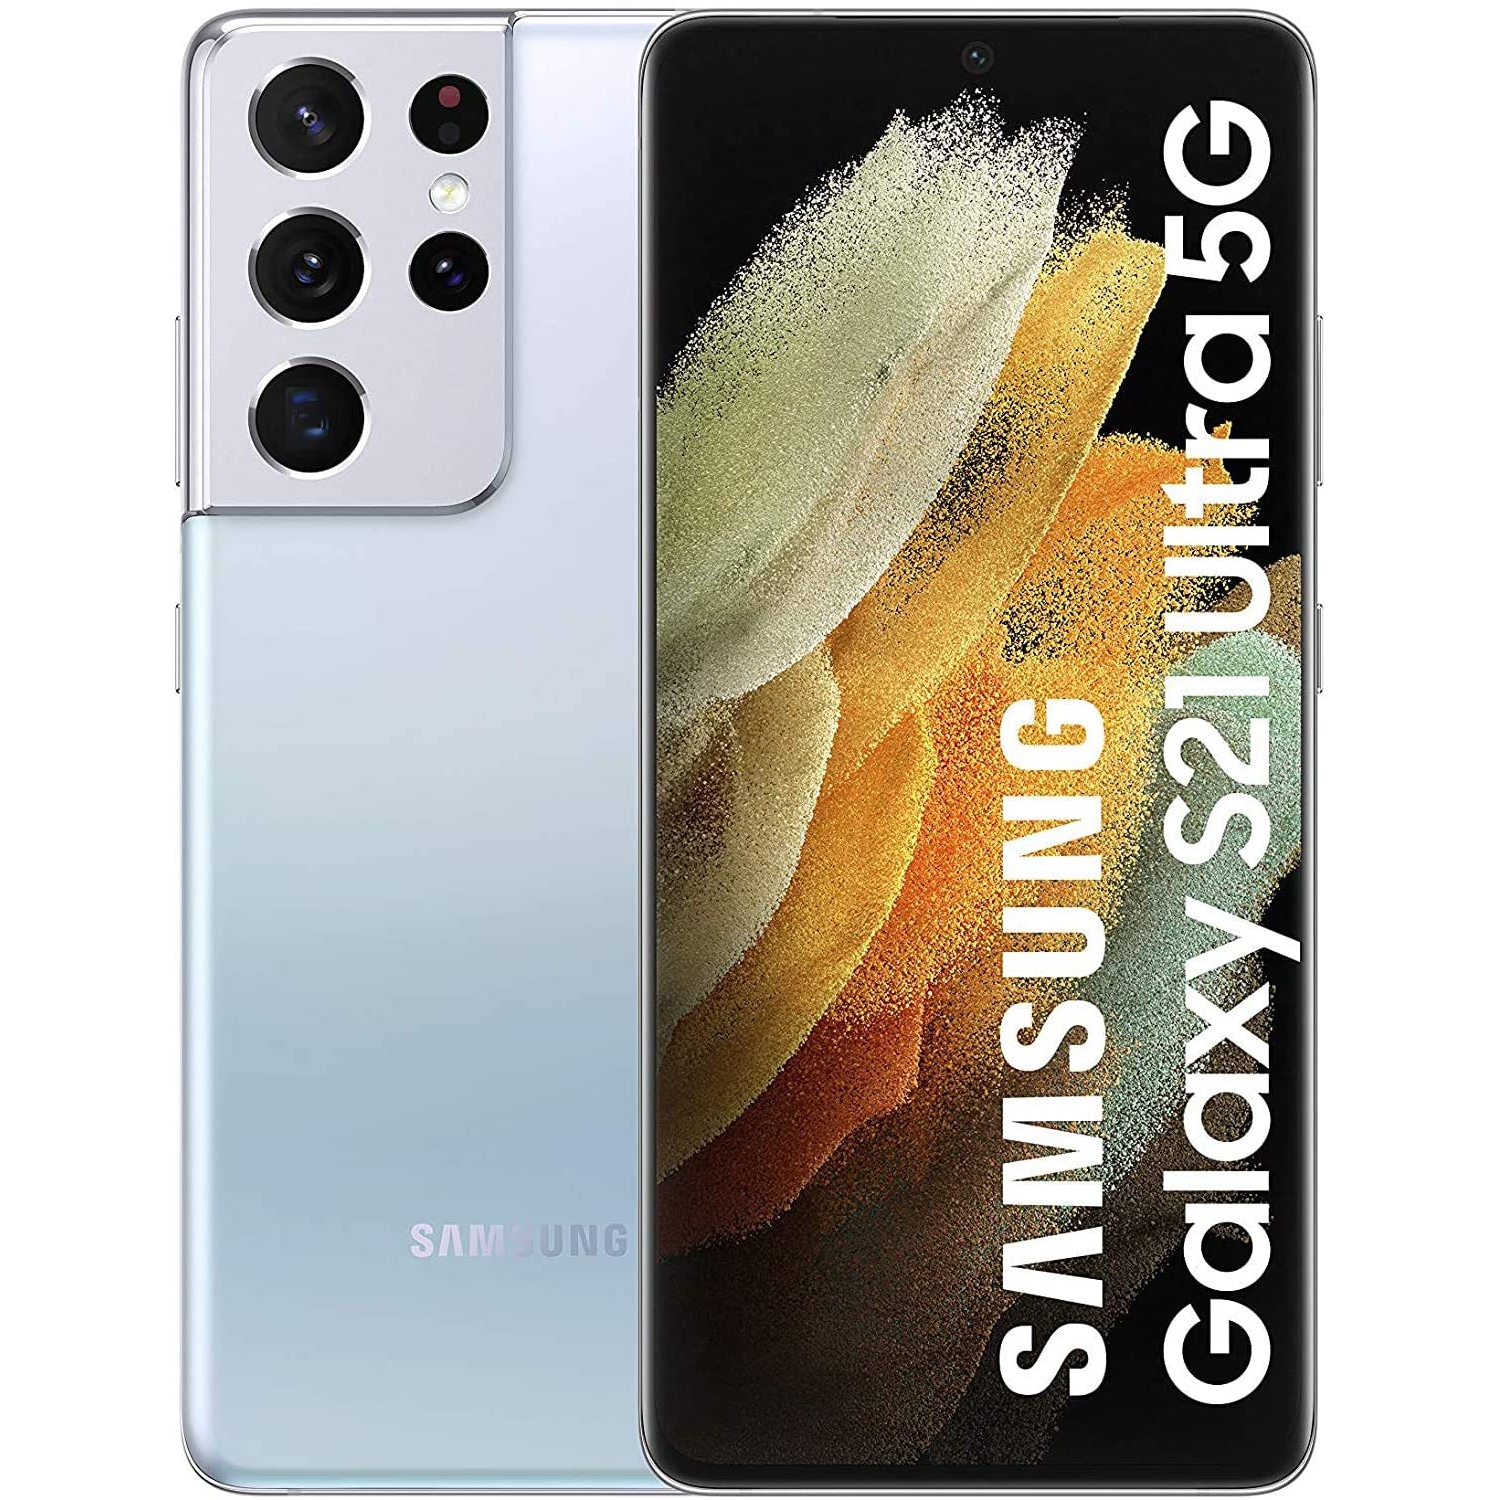 Samsung Galaxy S21 Ultra 5G 256GB Factory Unlocked Smartphone - Phantom Silver - International Version